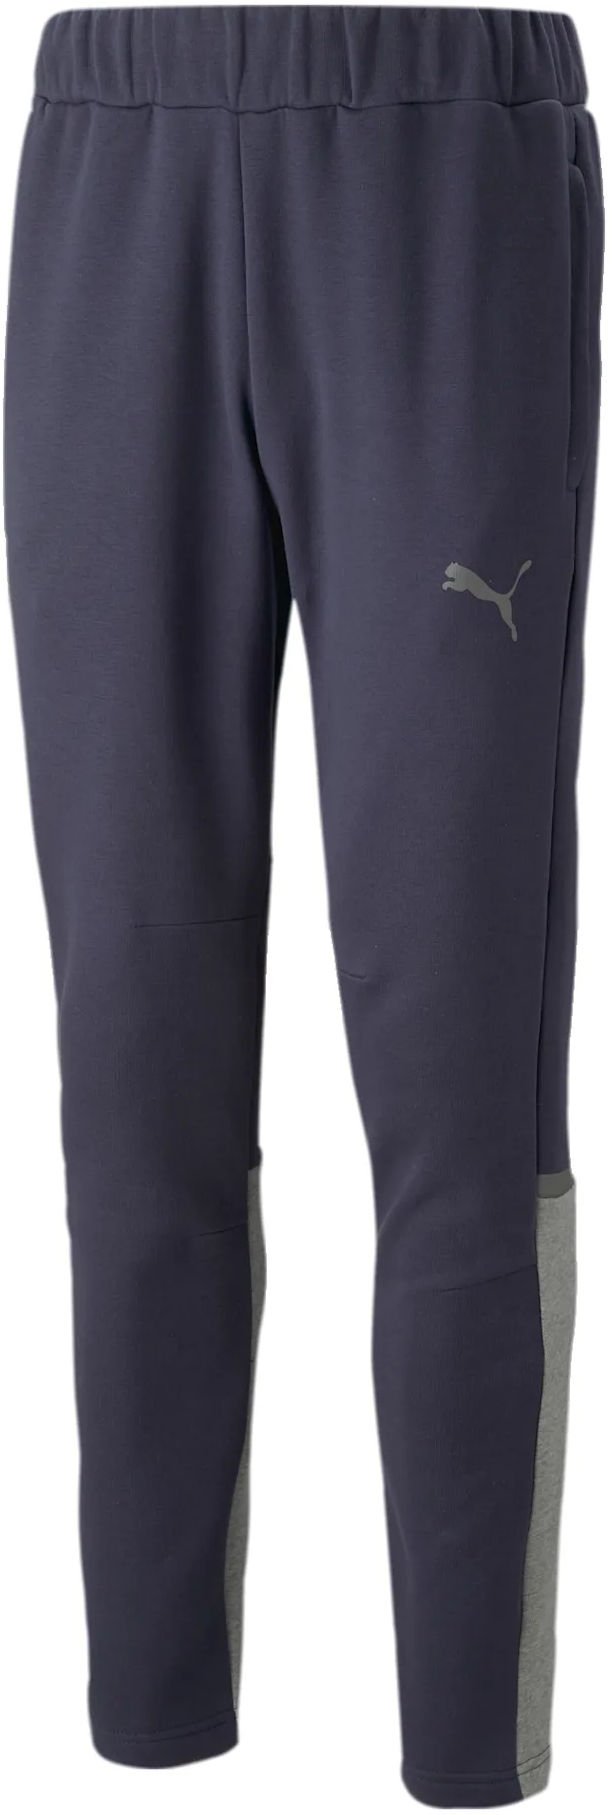 Puma Evocore Pant Men's Trousers - Medium Gray Heather